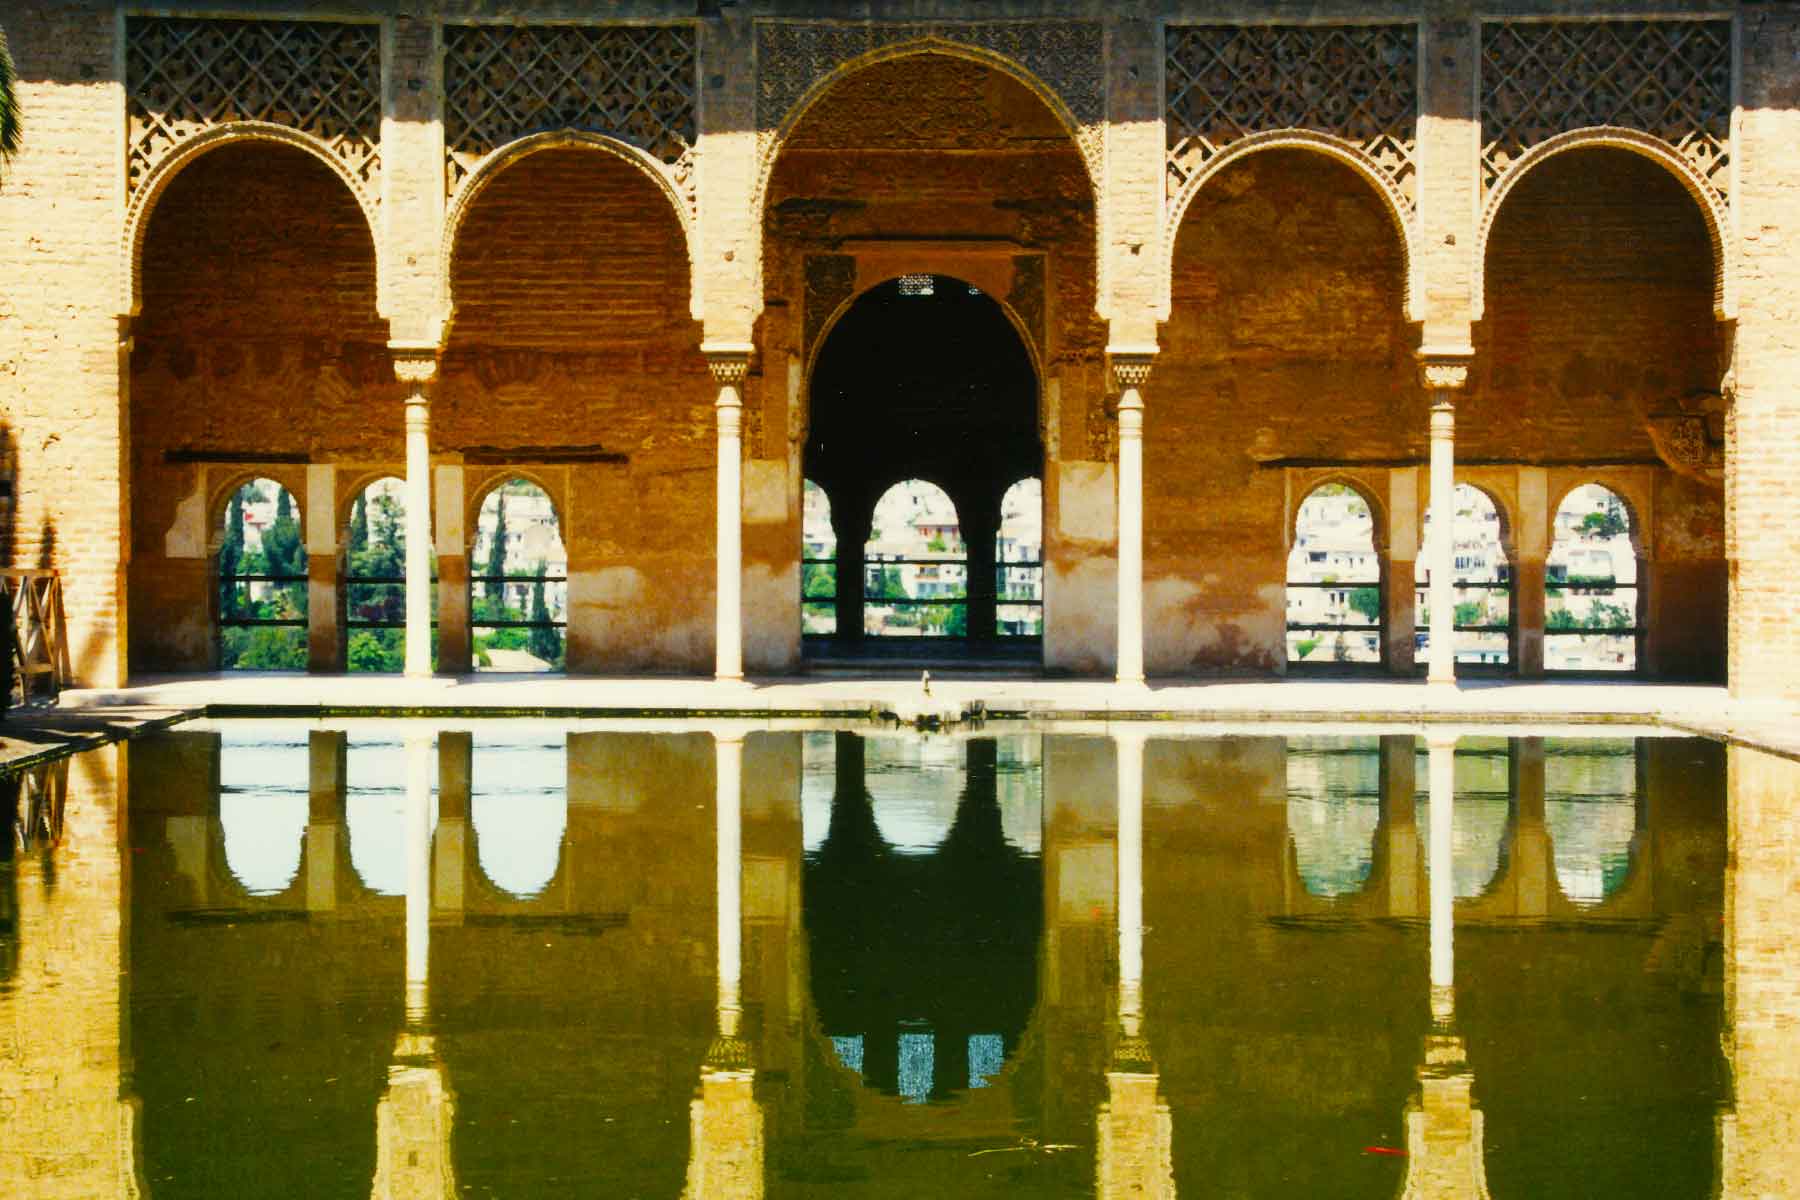 Alhambra - Granada Spain - Study Abroad Journal - Steven Andrew Martin